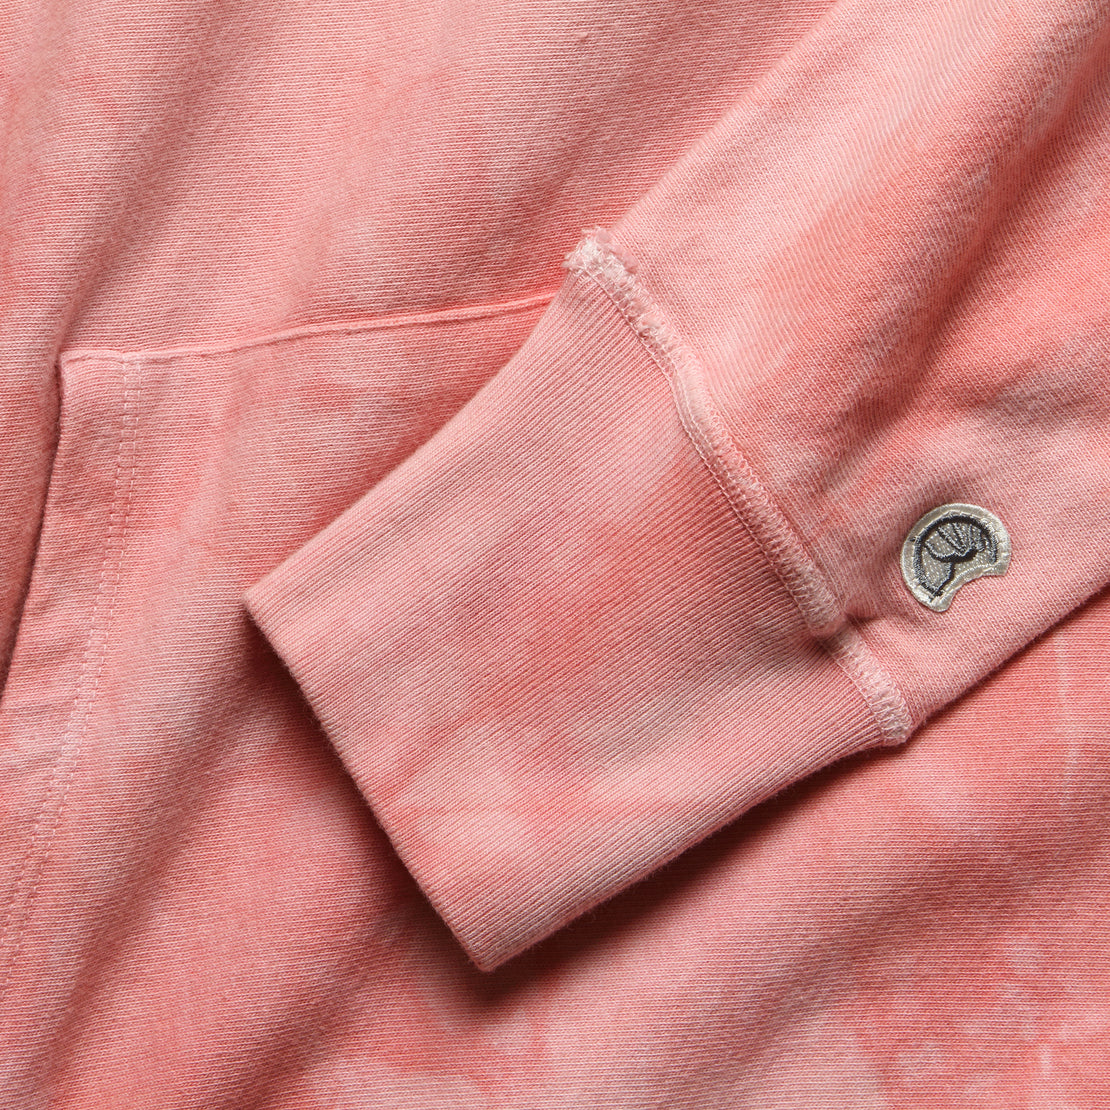 Popover Hoodie - Pink Tie Dye - Todd Snyder - STAG Provisions - Tops - Fleece / Sweatshirt